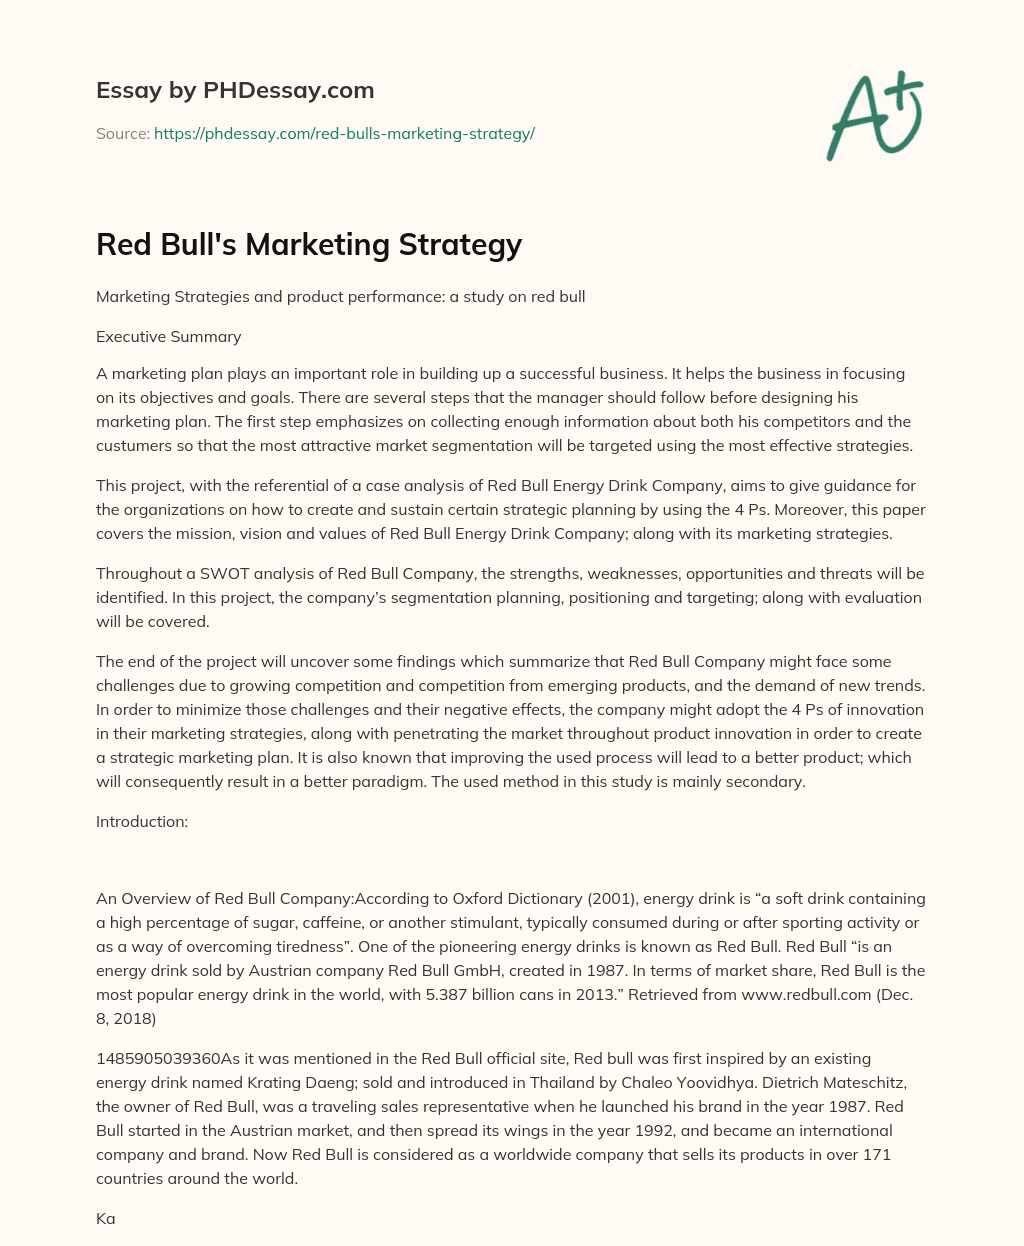 Red Bull’s Marketing Strategy essay